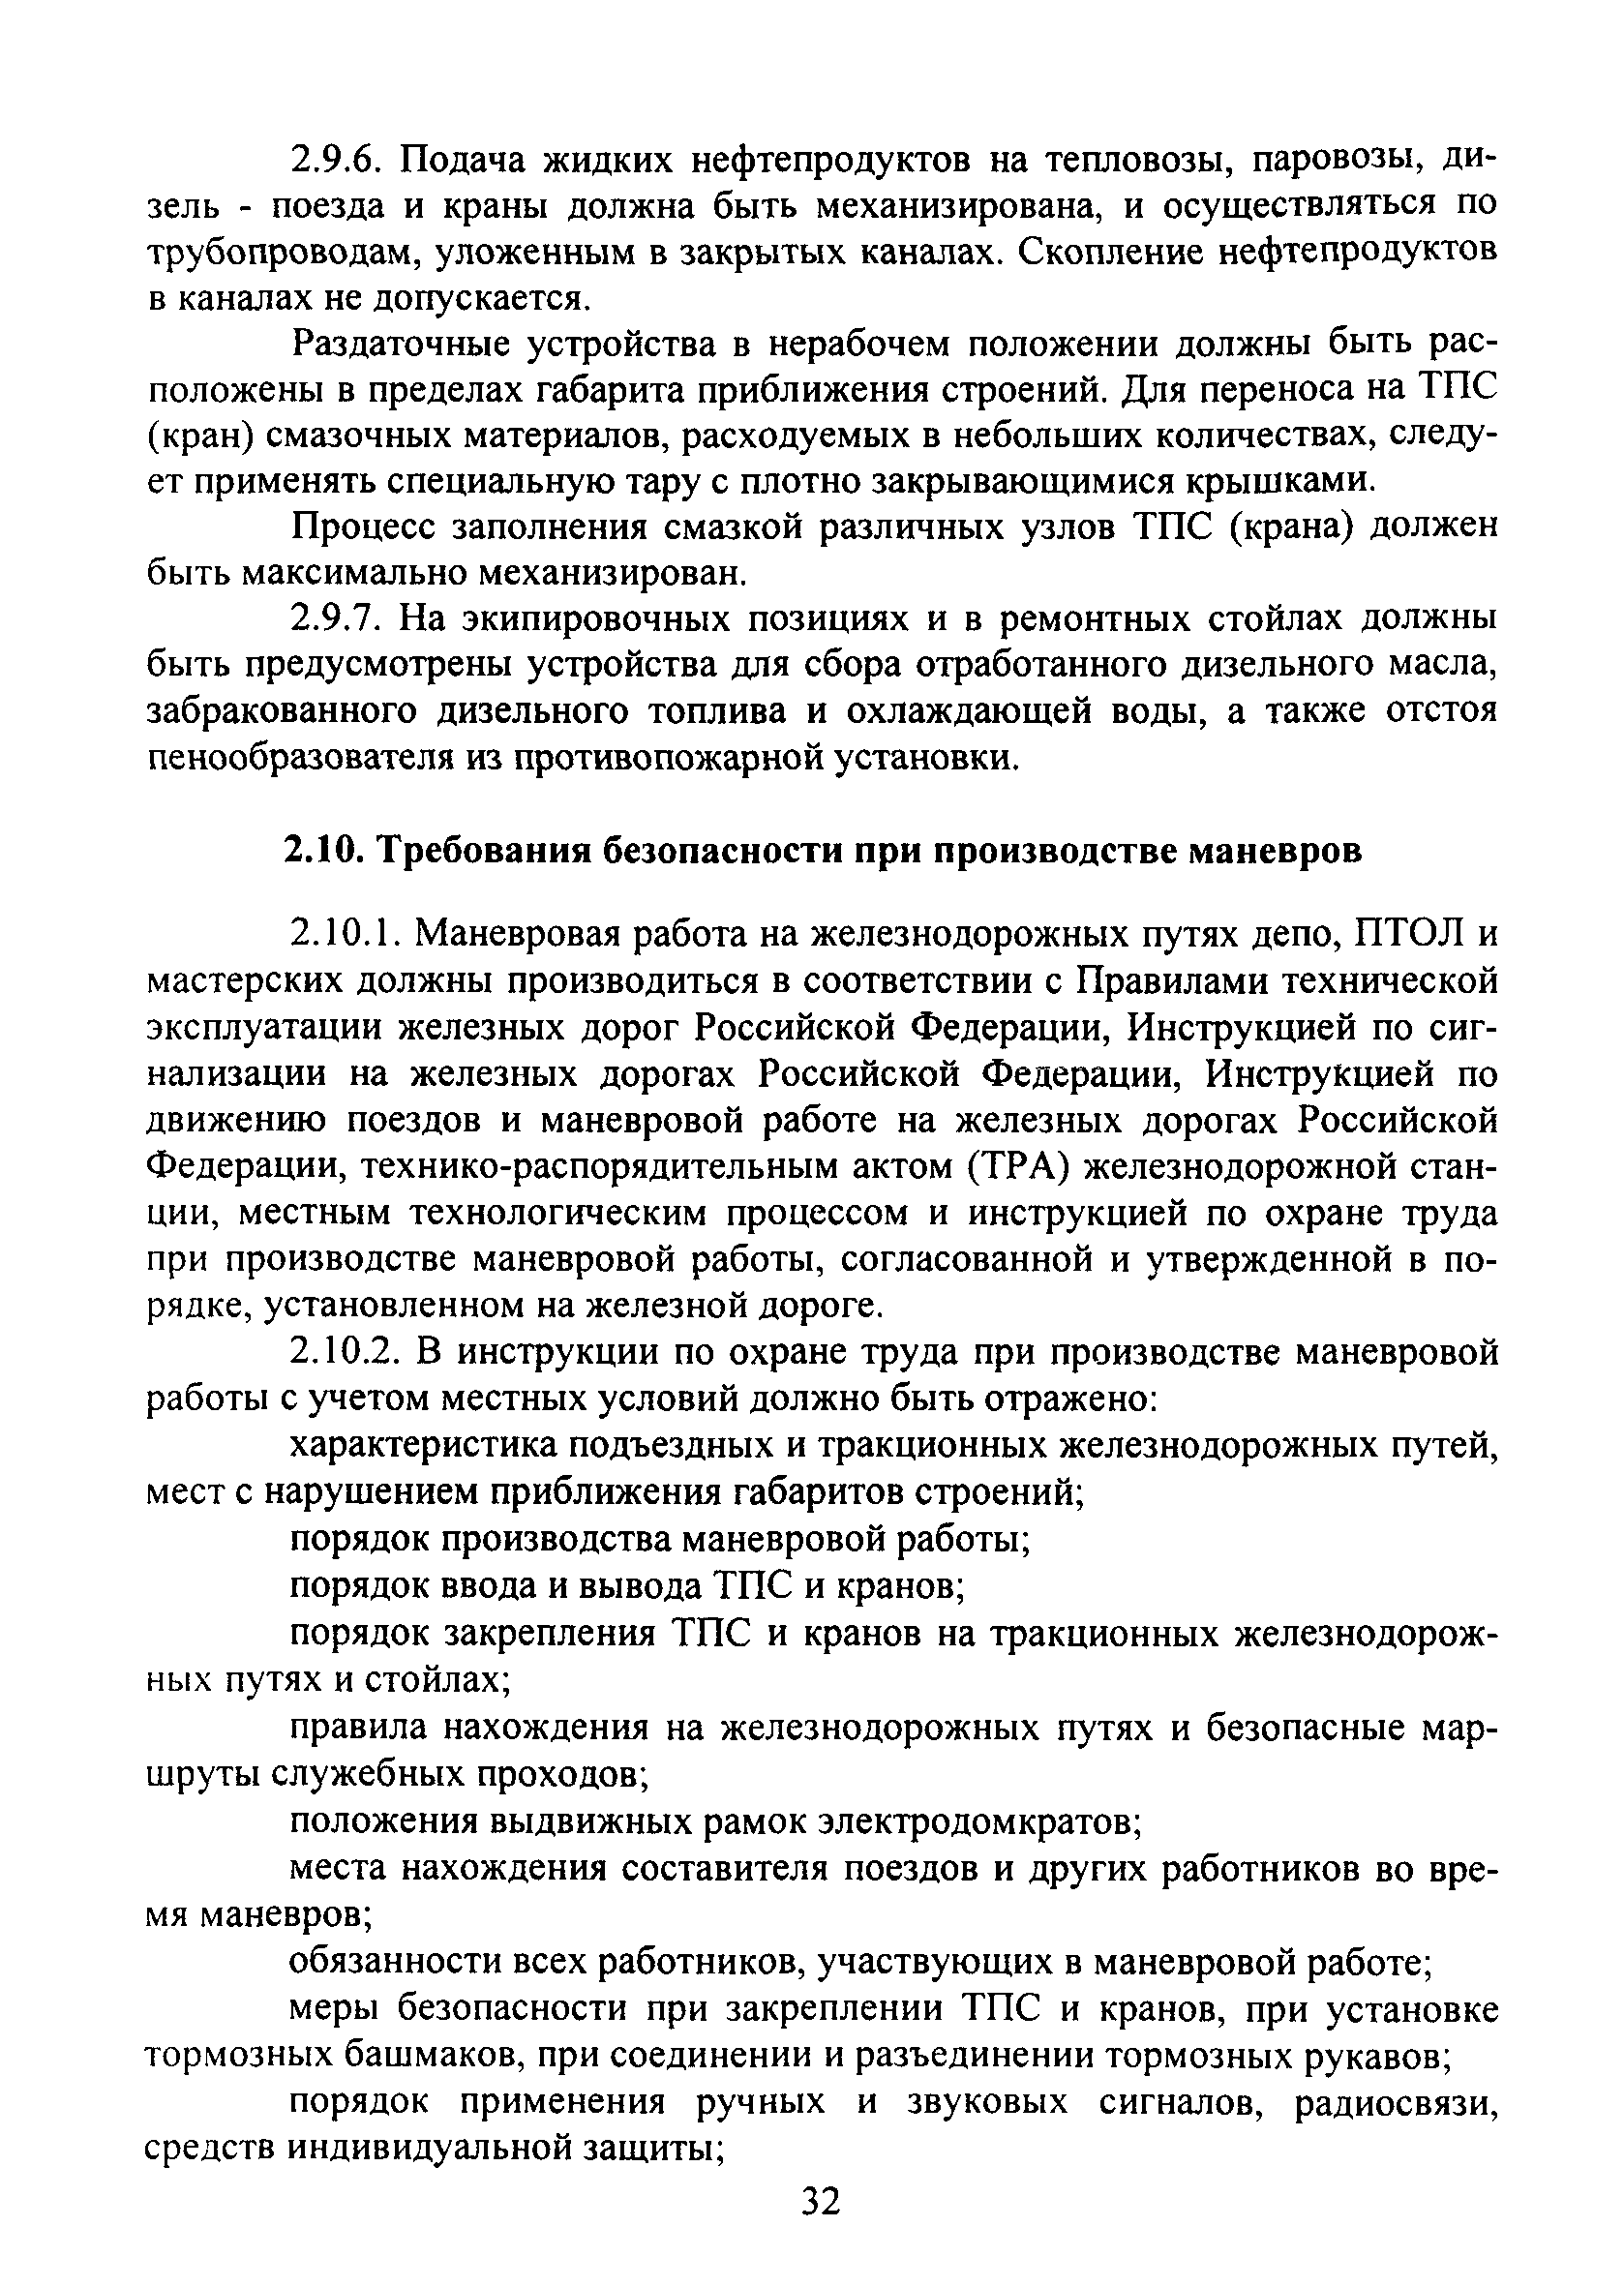 ПОТ Р О-32-ЦТ-668-99